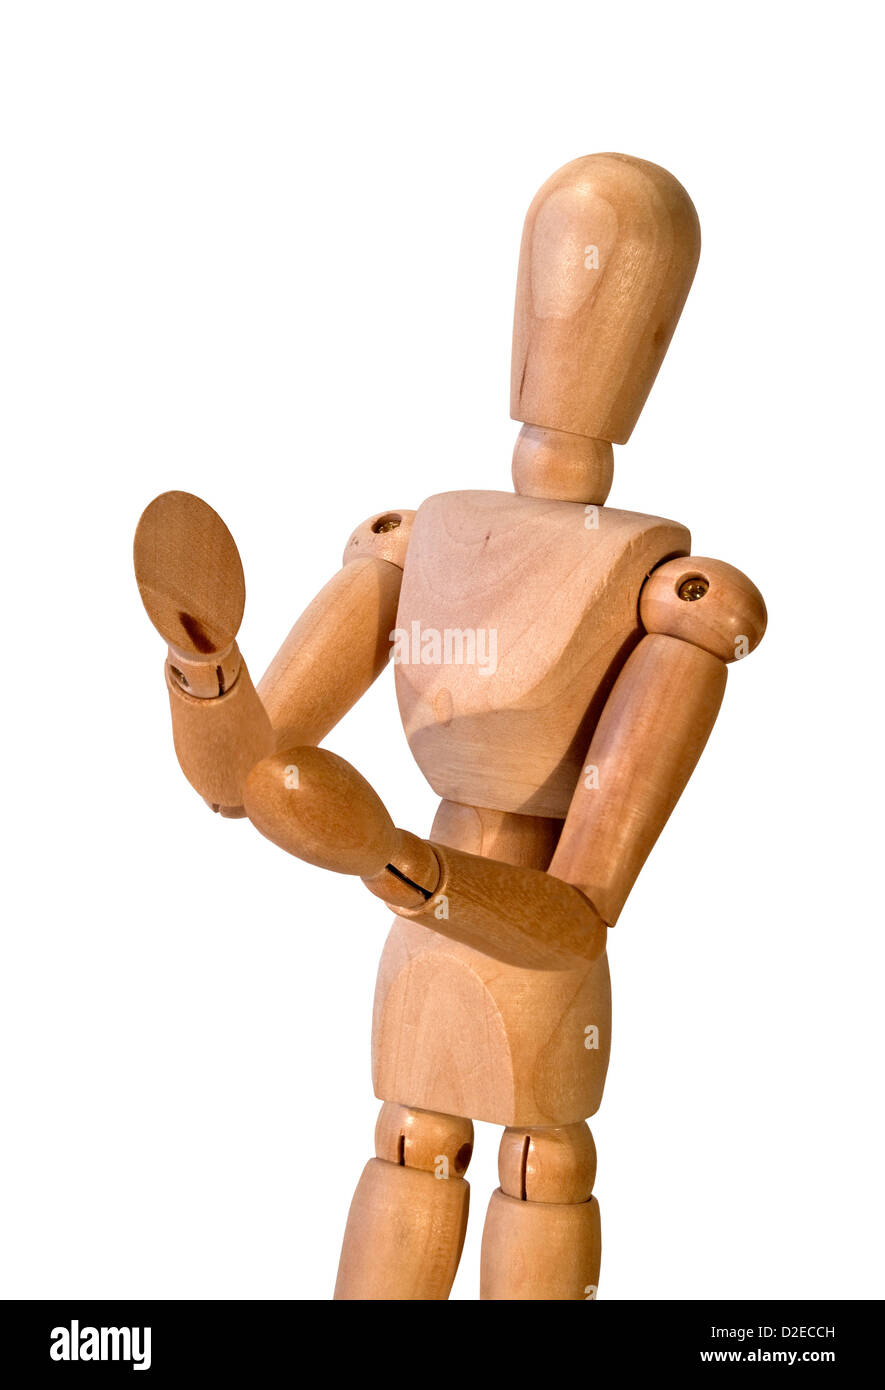 Lay figure wooden mannequin Wood action figure model Maniquí articulado de  madera monigote muñeco de madera Stock Photo - Alamy